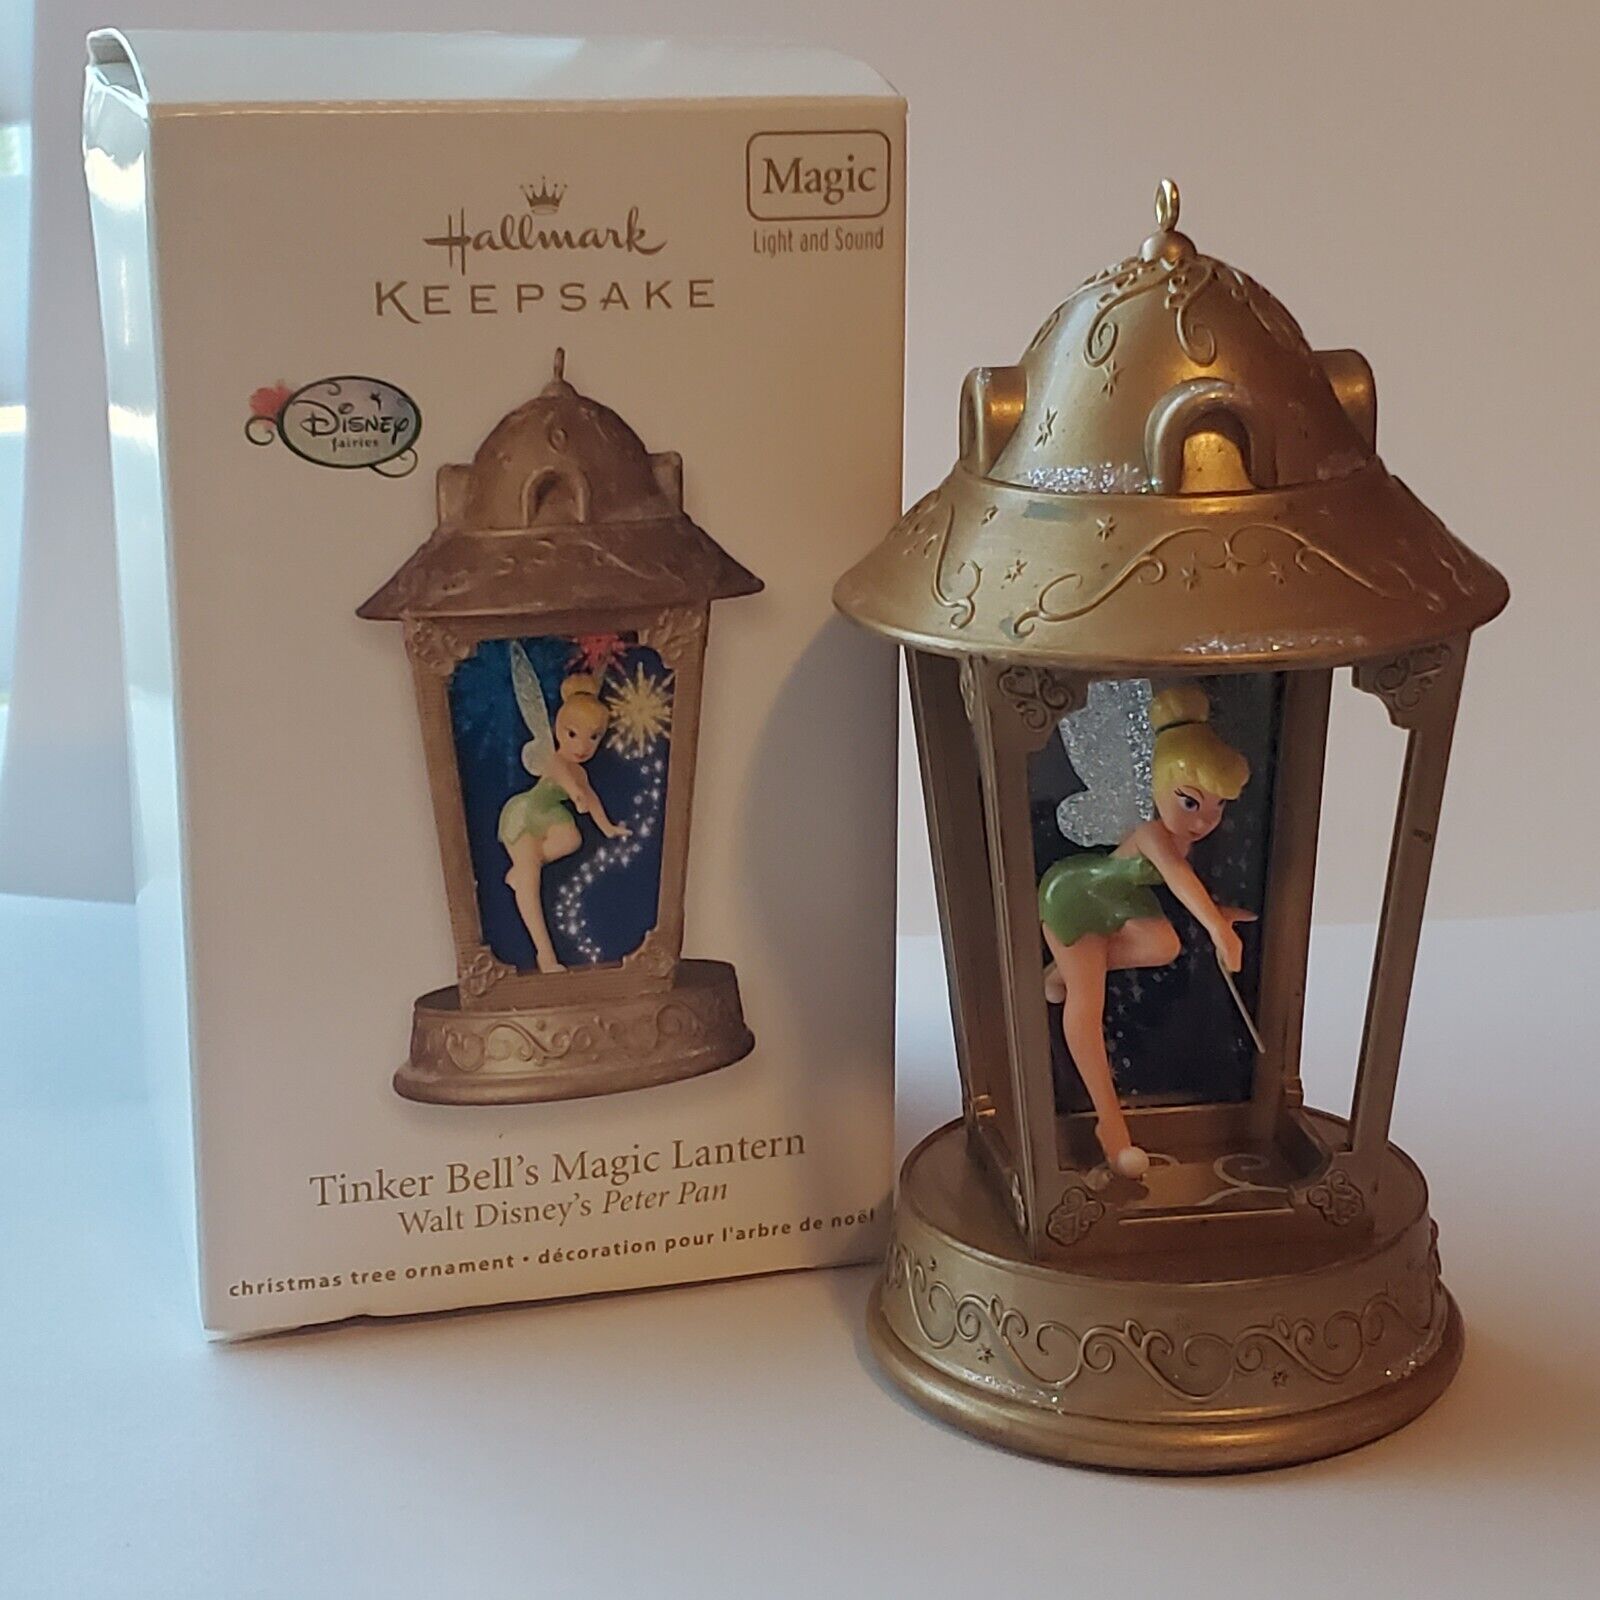 2011 Hallmark Disney Tinker Bell’s Magic Lantern  Peter Pan Ornament  TESTED